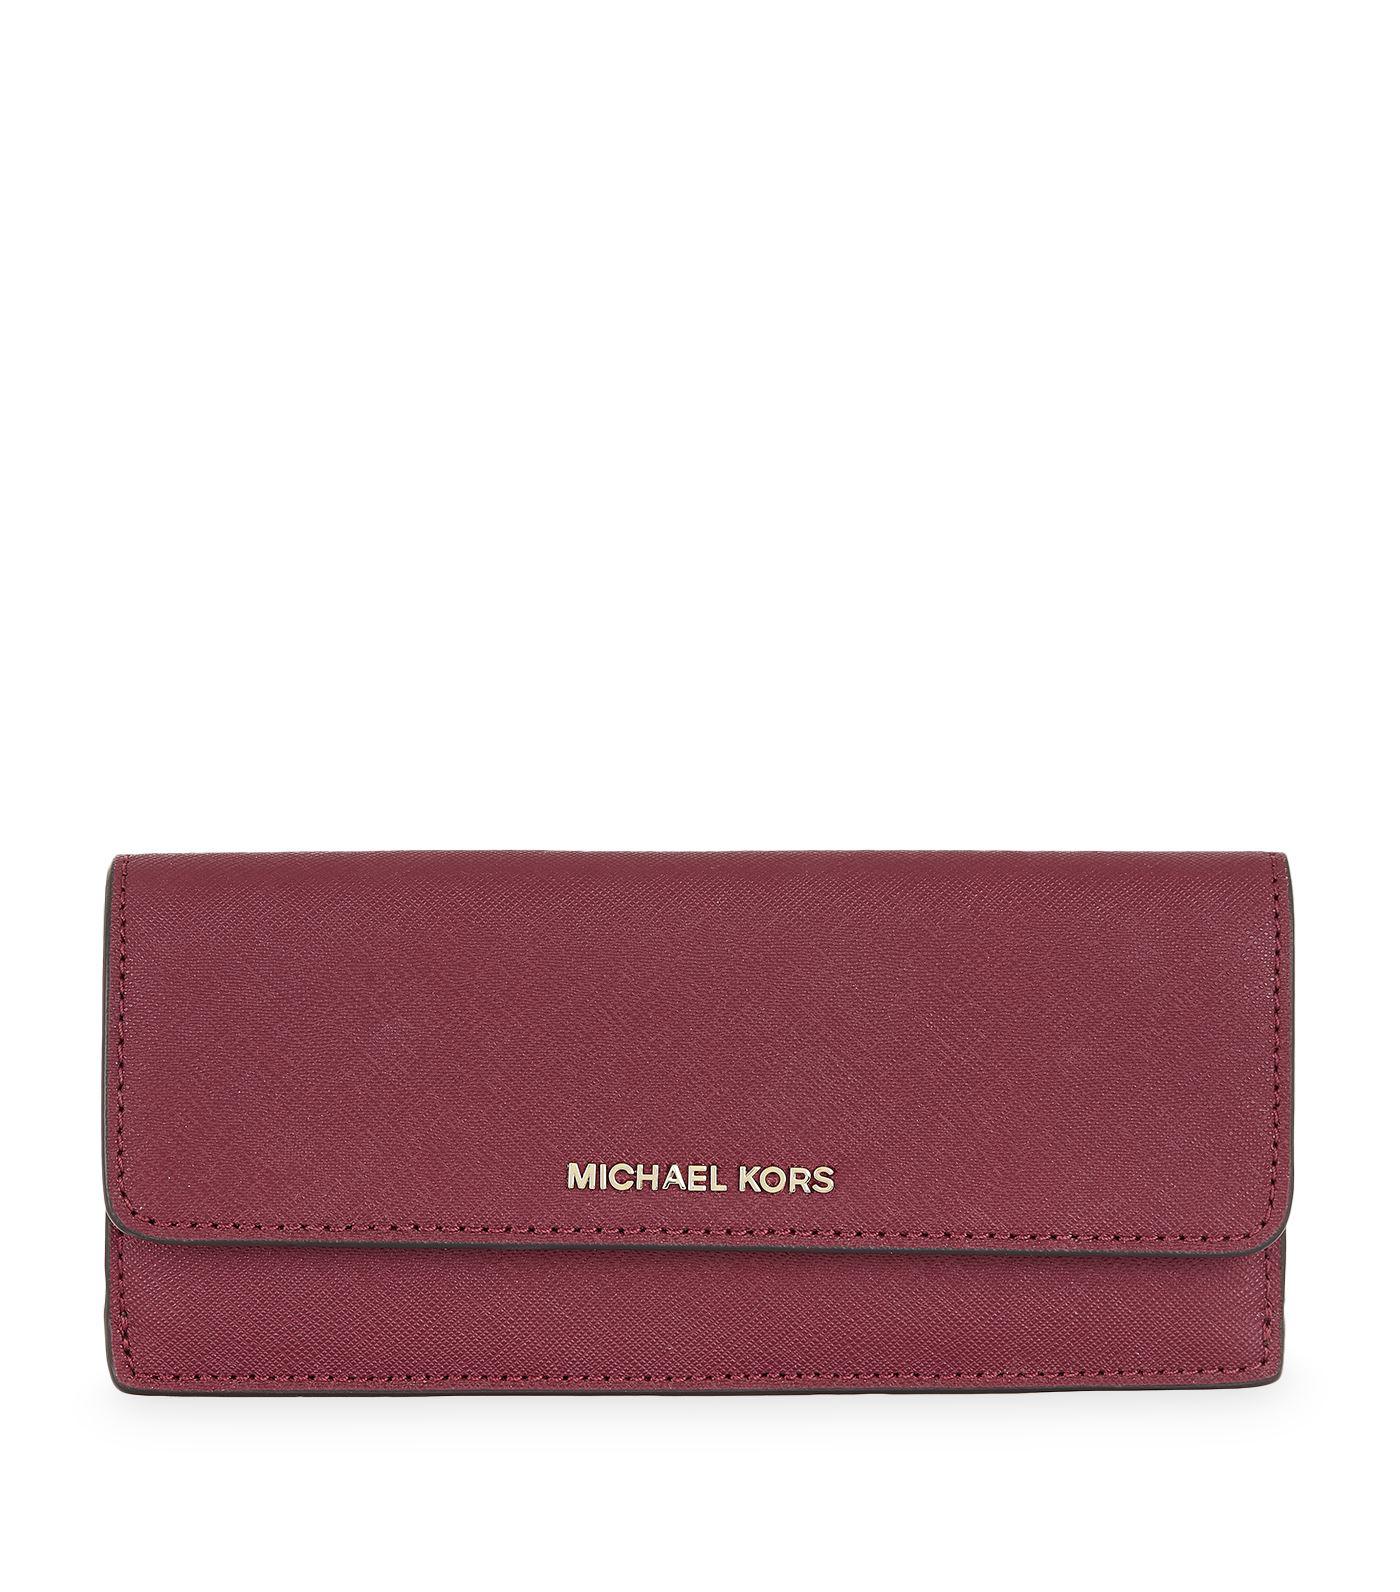 michael kors money pieces flat wallet